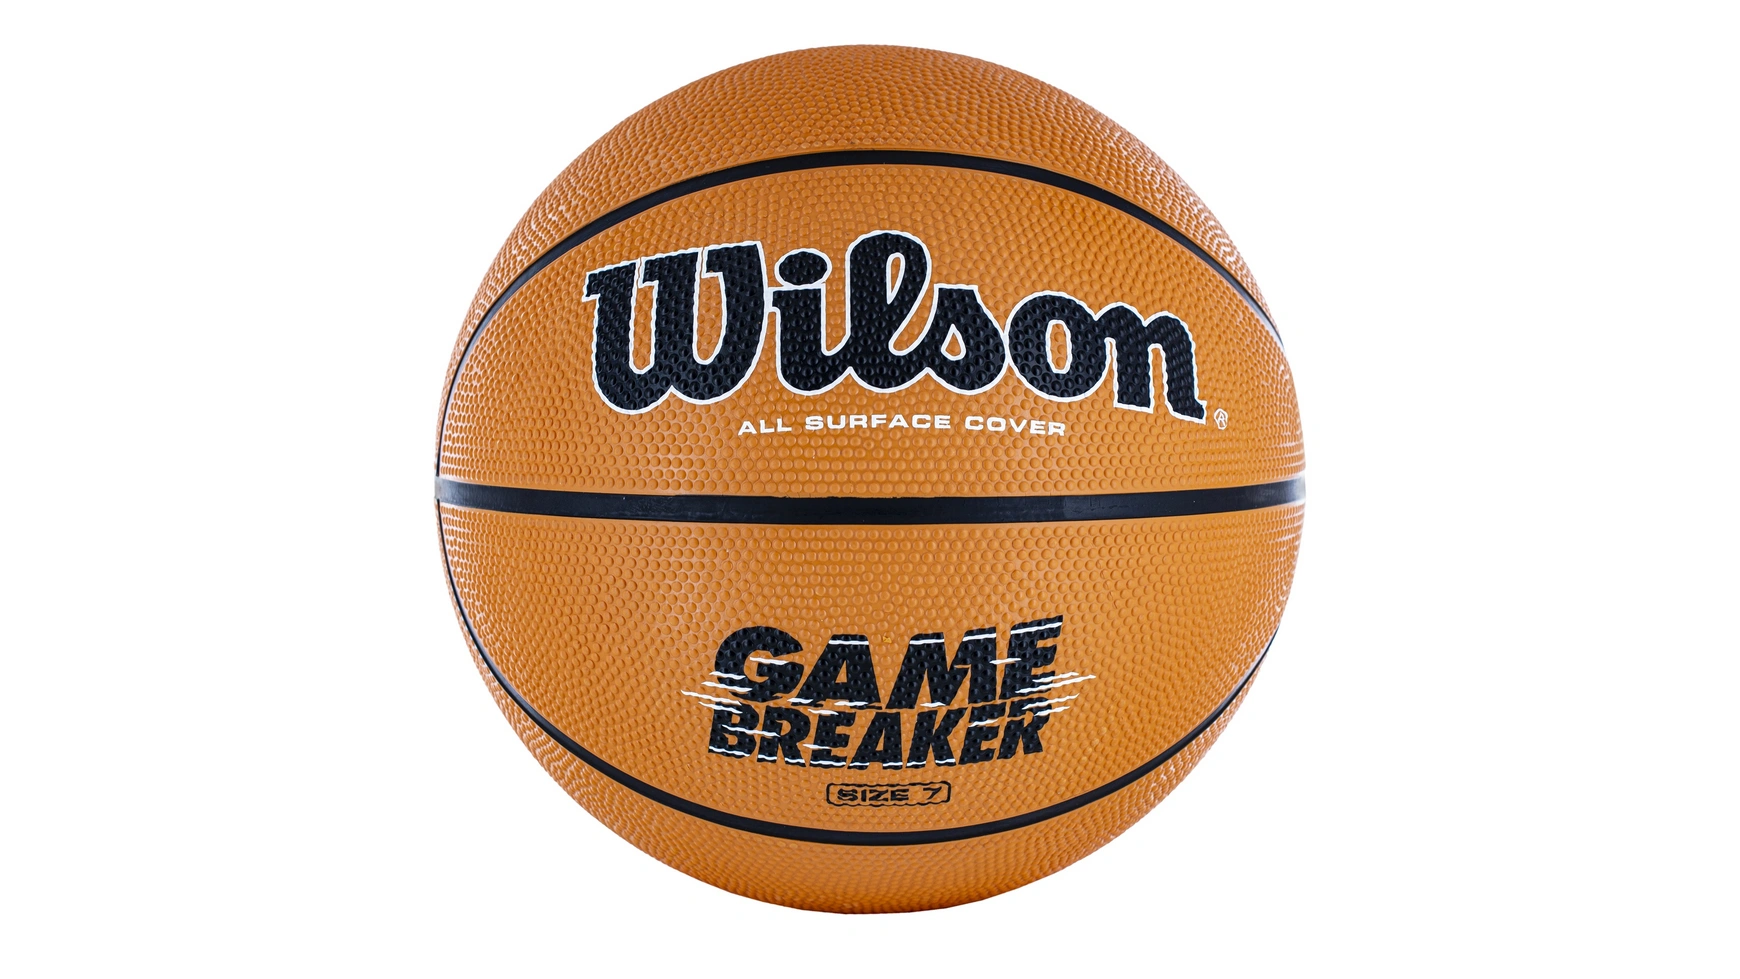 Wilson Basketball Gamebreaker, размер 7 authentic brand reflective basketball night light basketball no 7 laser street basketball free air pump air needle bag